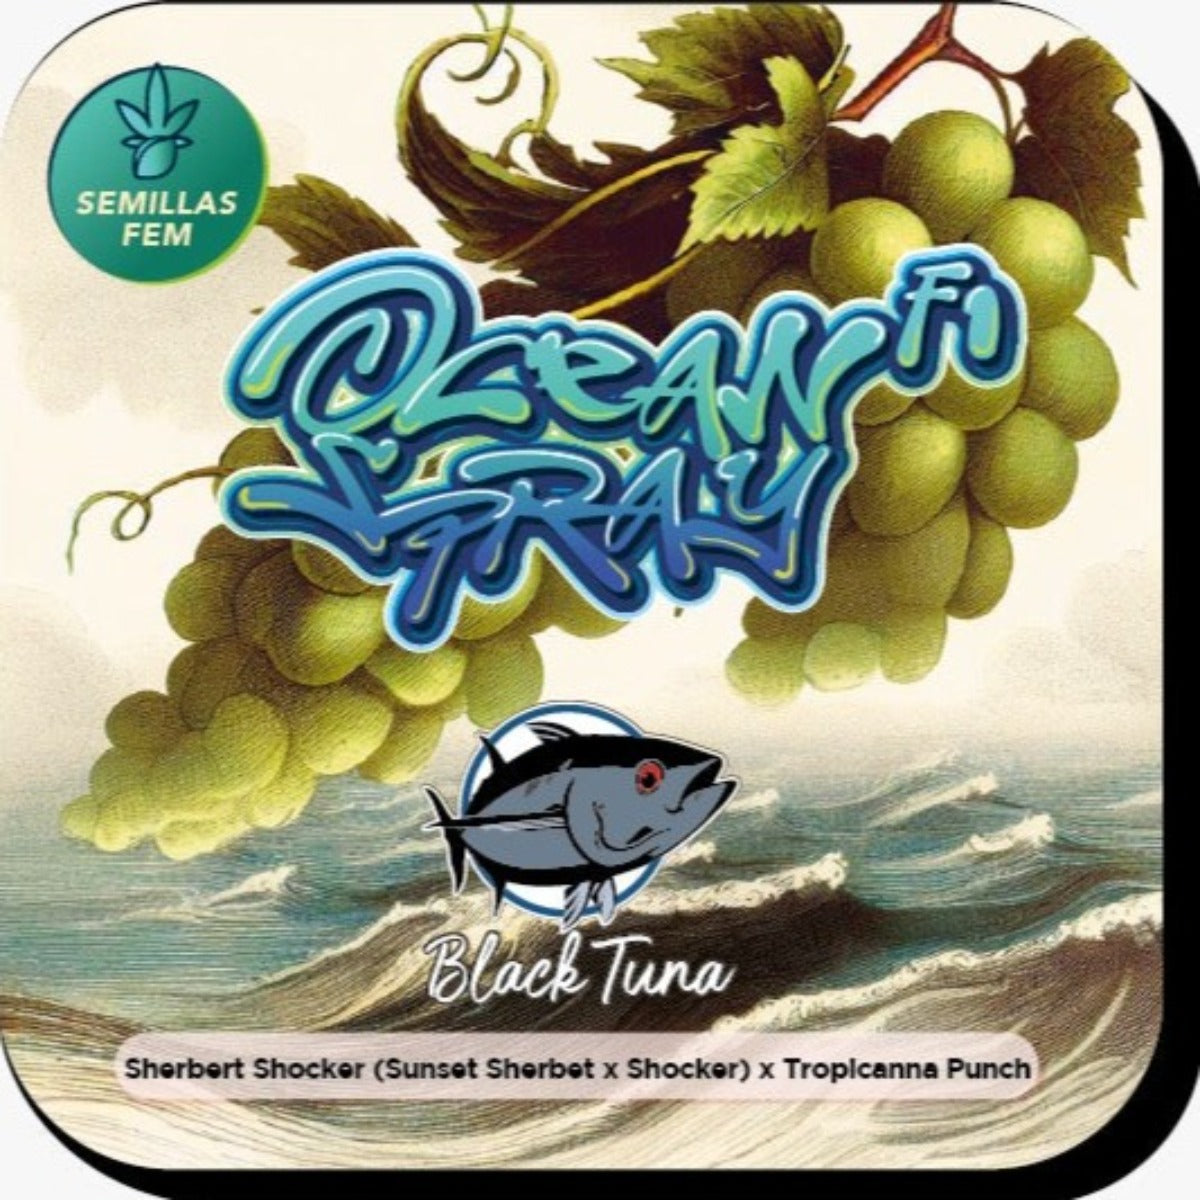 Ocean Spray Feminizada - Black Tuna - Pack x 3